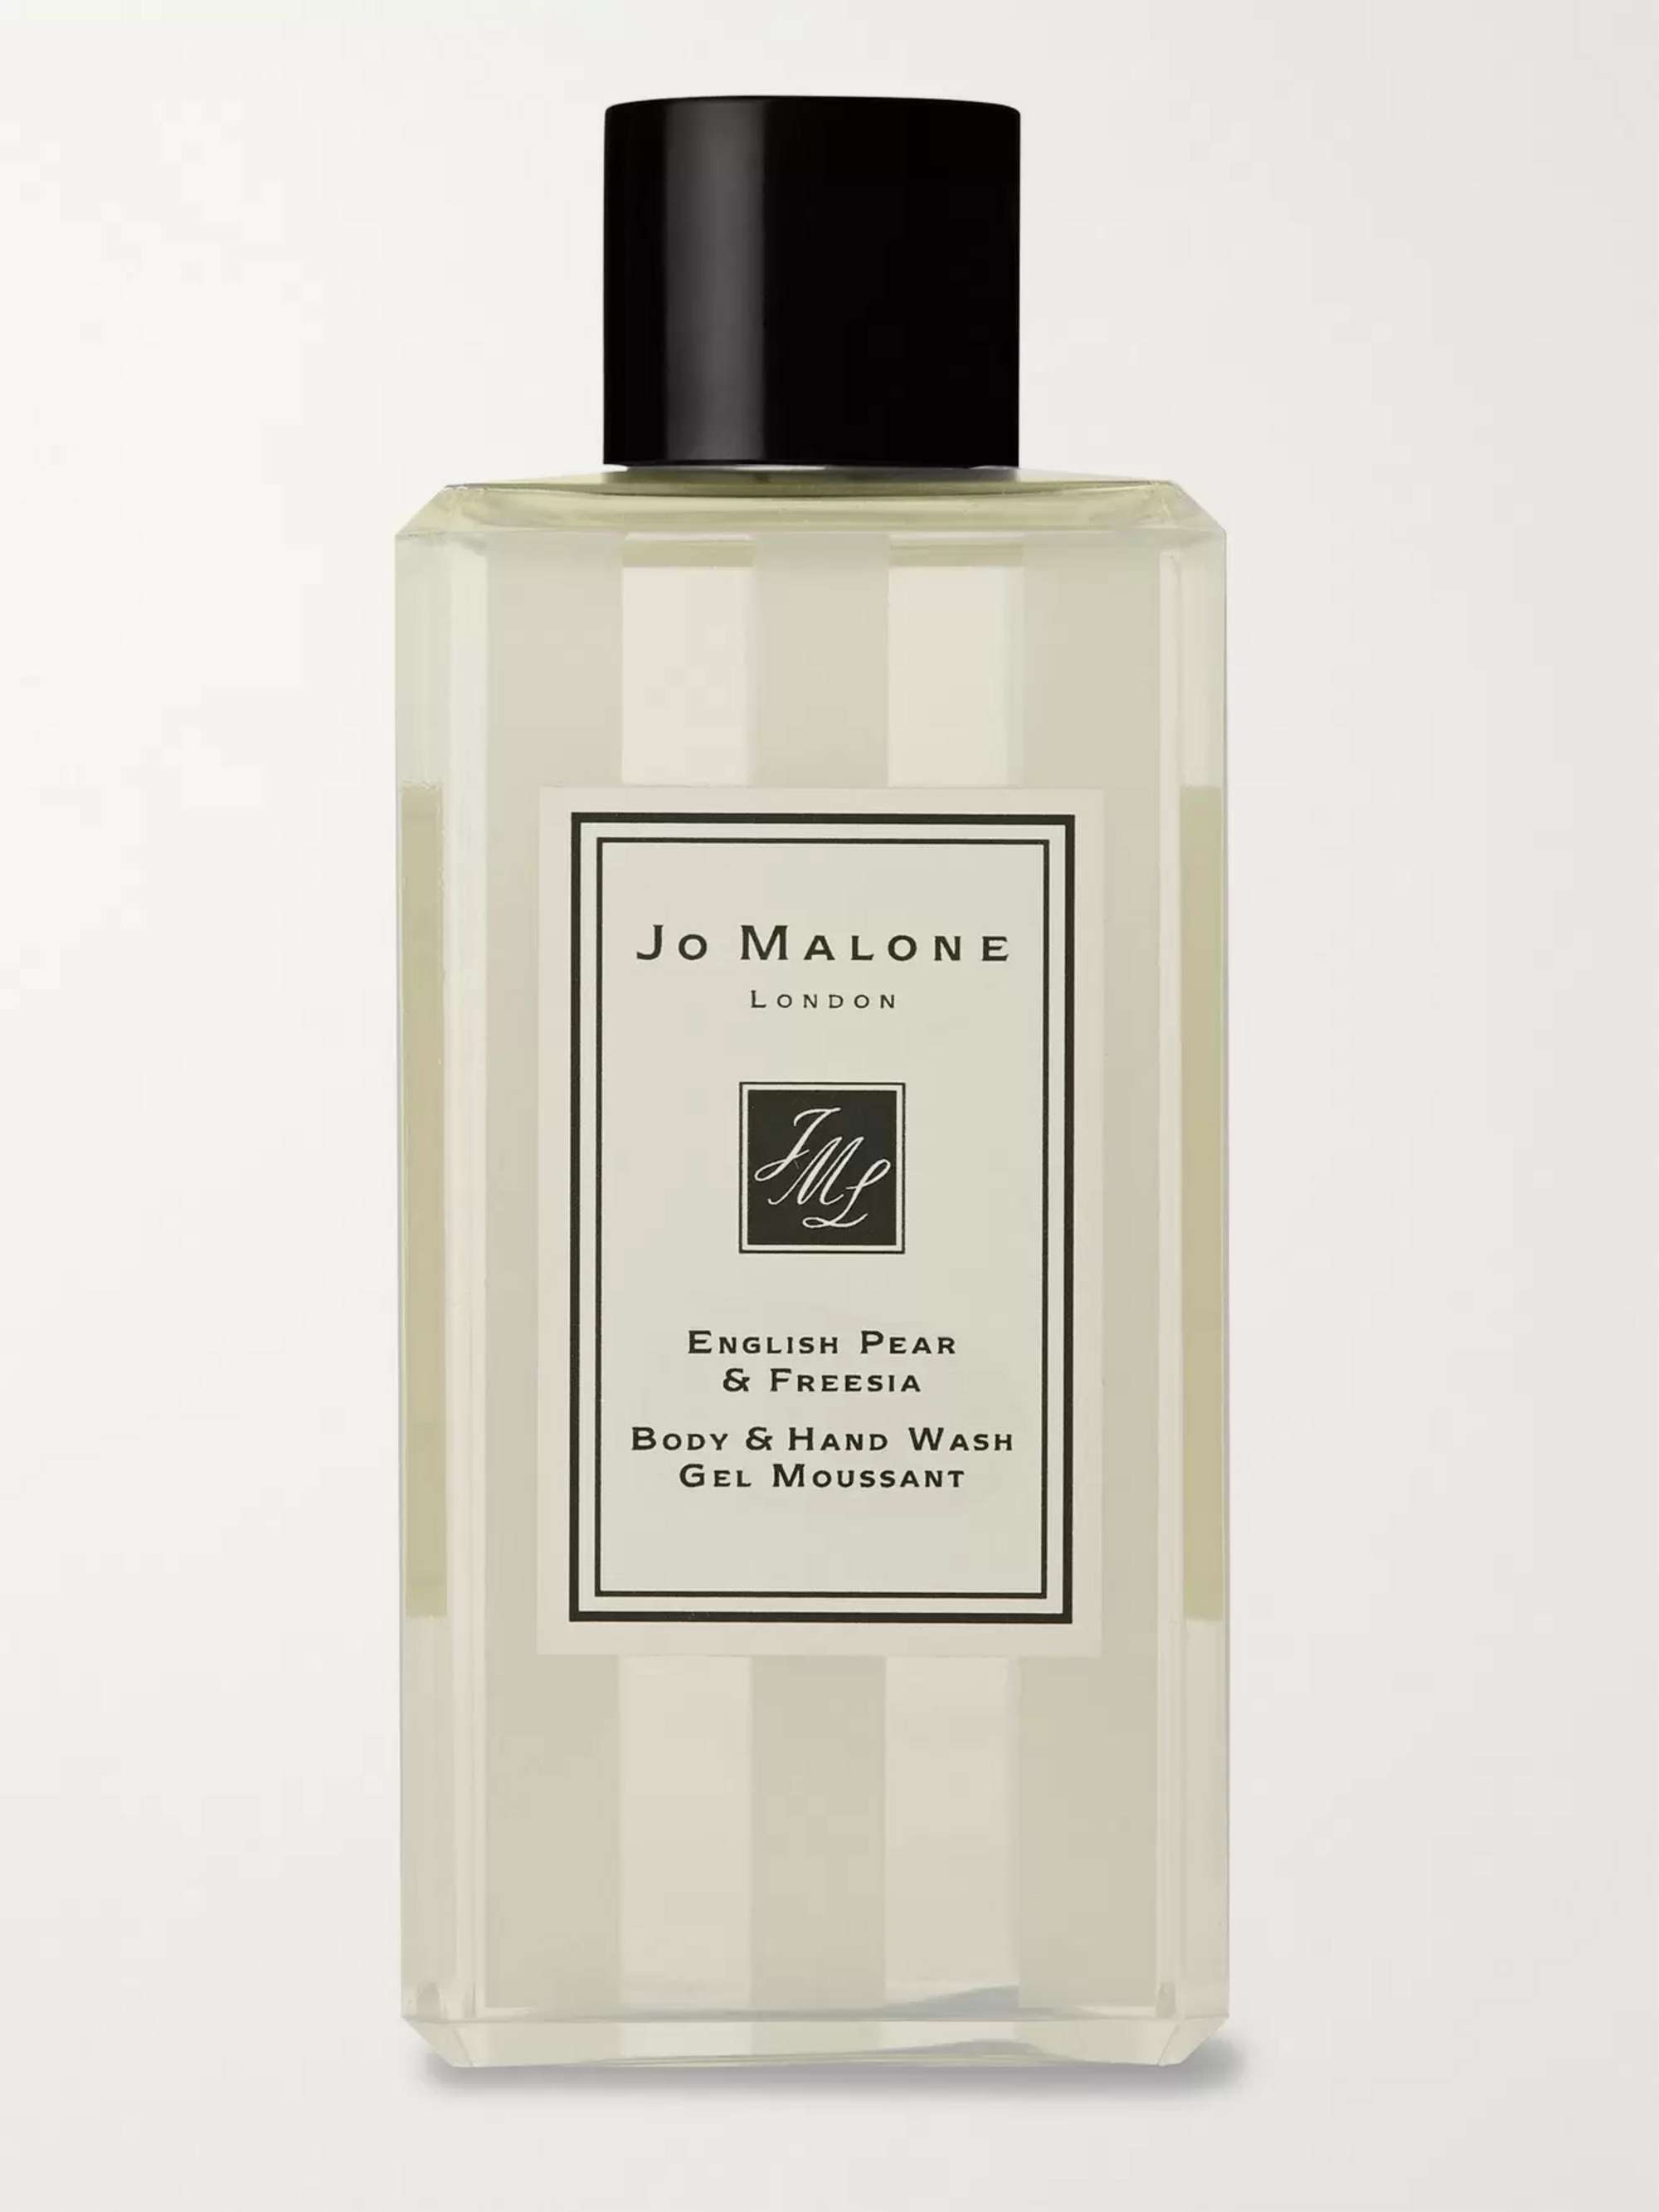 JO MALONE English Pear & Freesia Body & Hand Wash, 100ml | MR PORTER